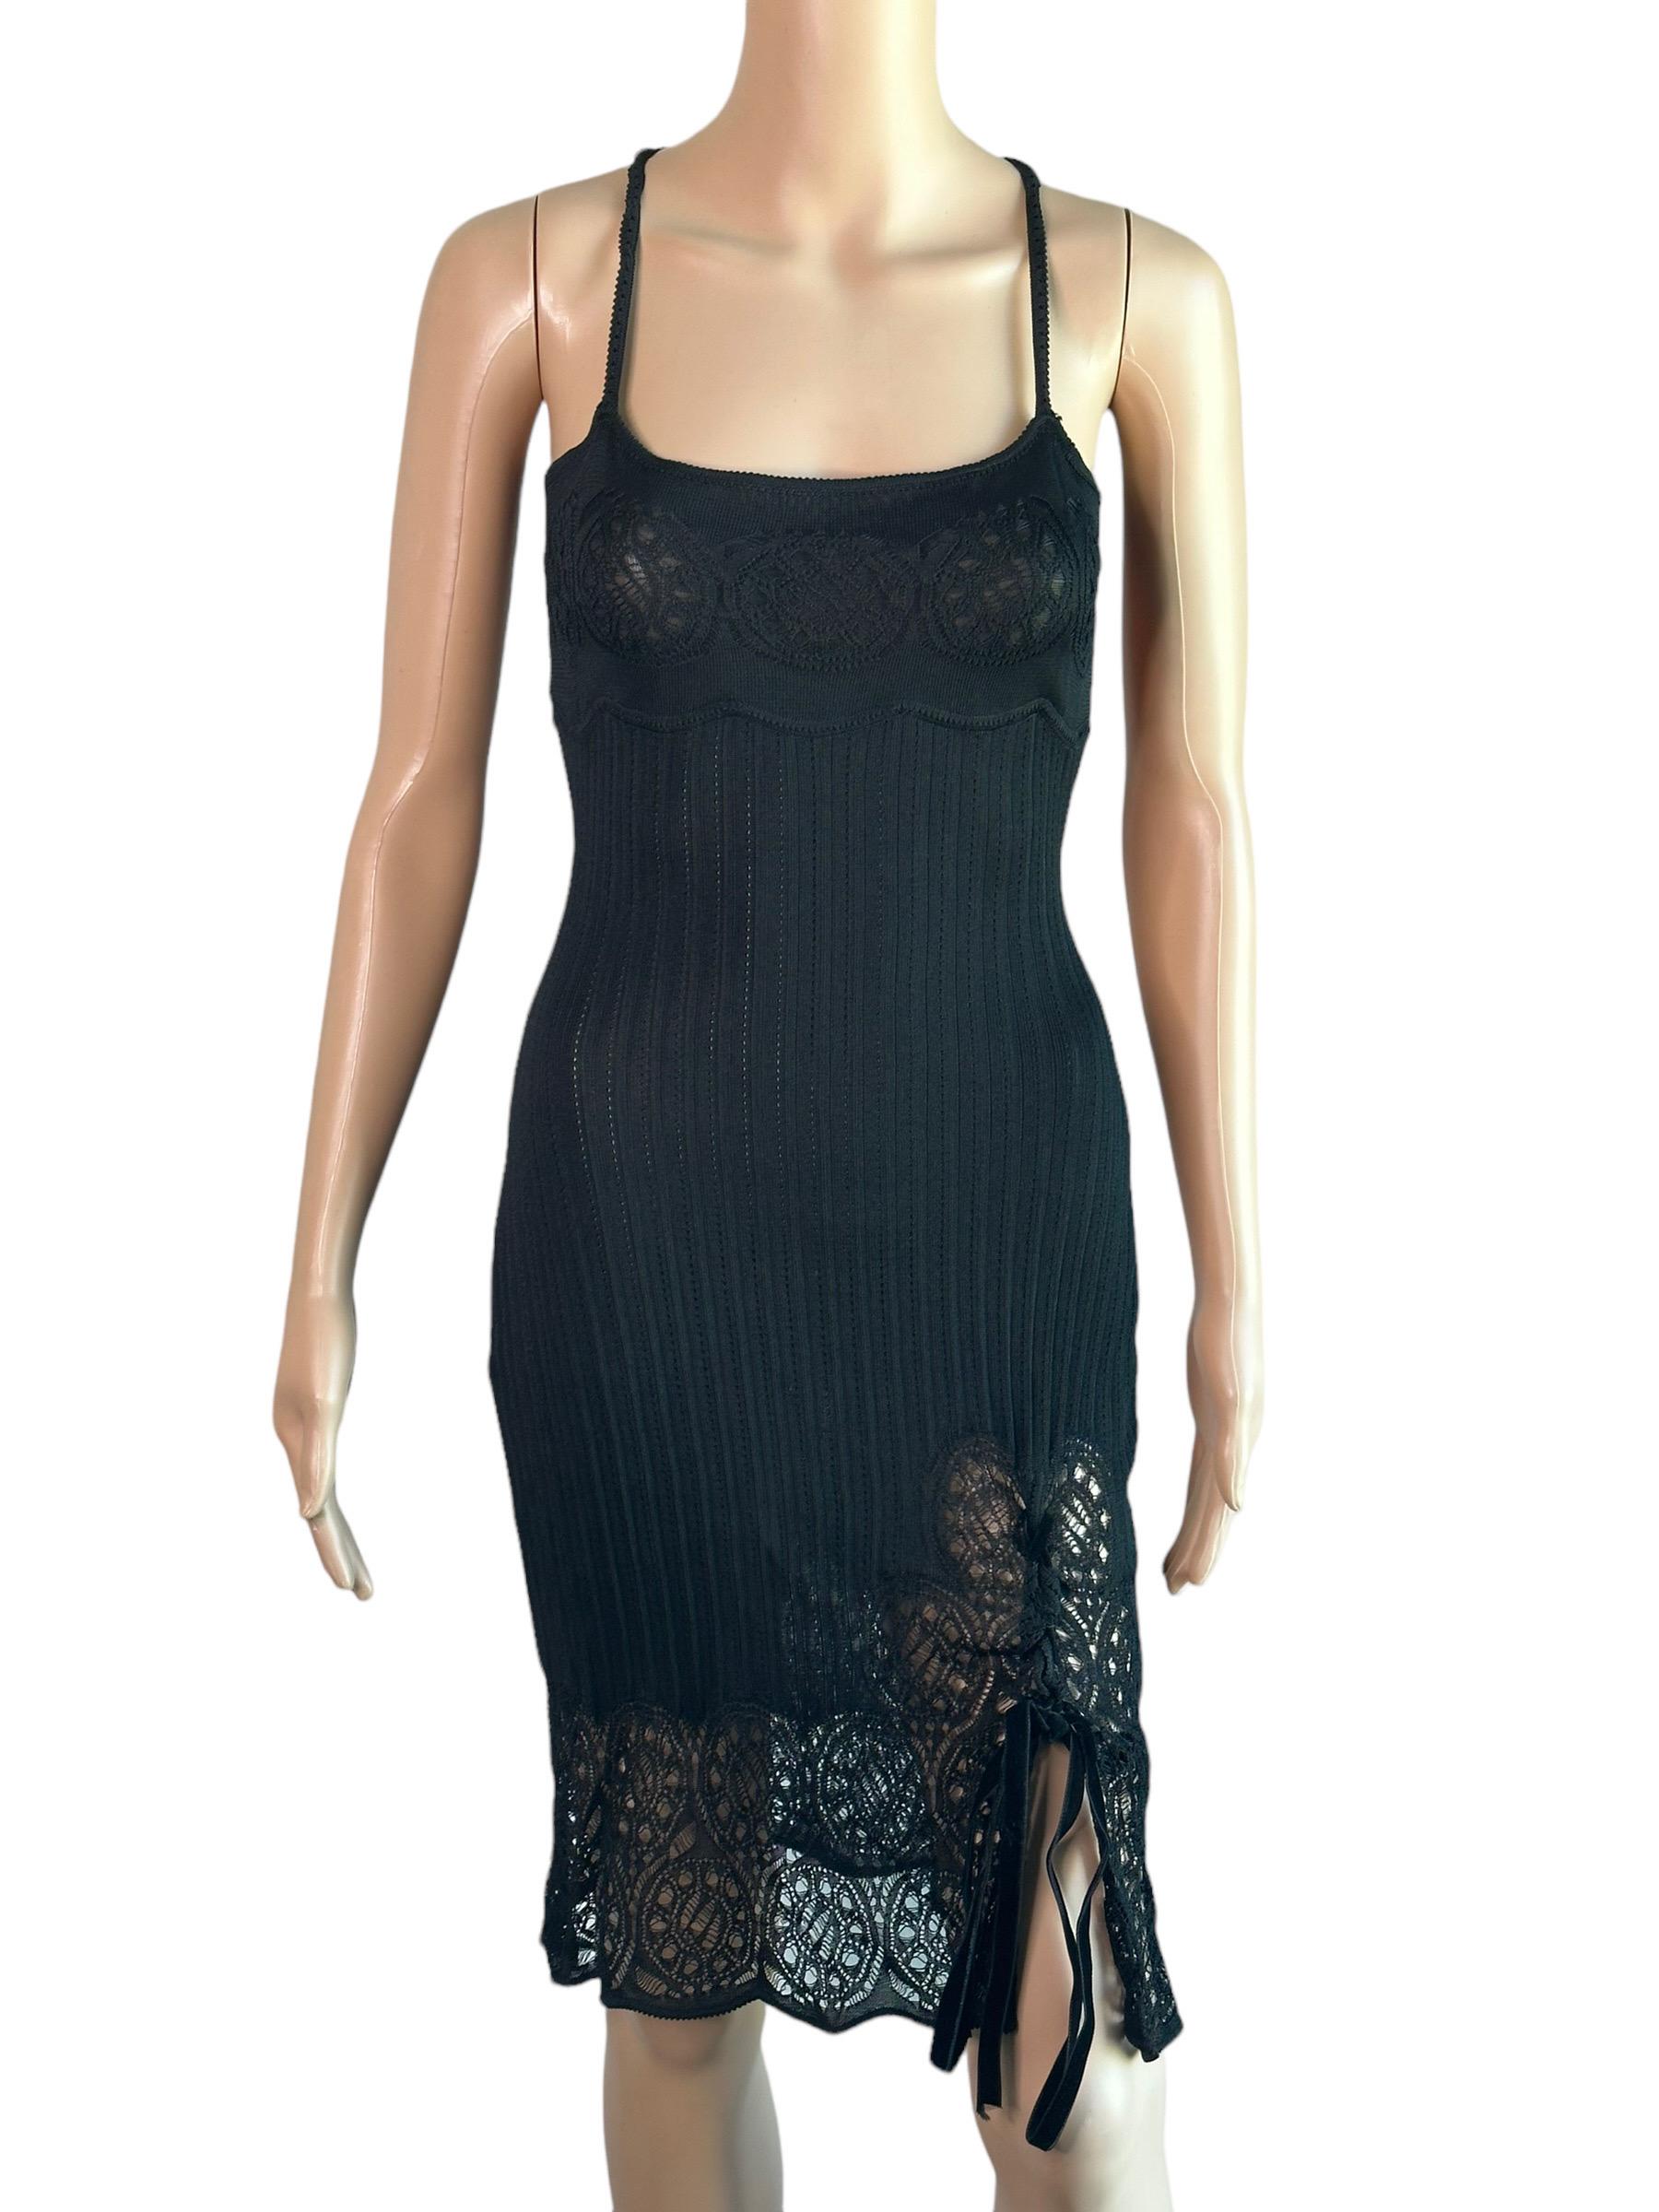 John Galliano S/S 1999 Sheer Lace Open Knit Black Mini Dress For Sale 7